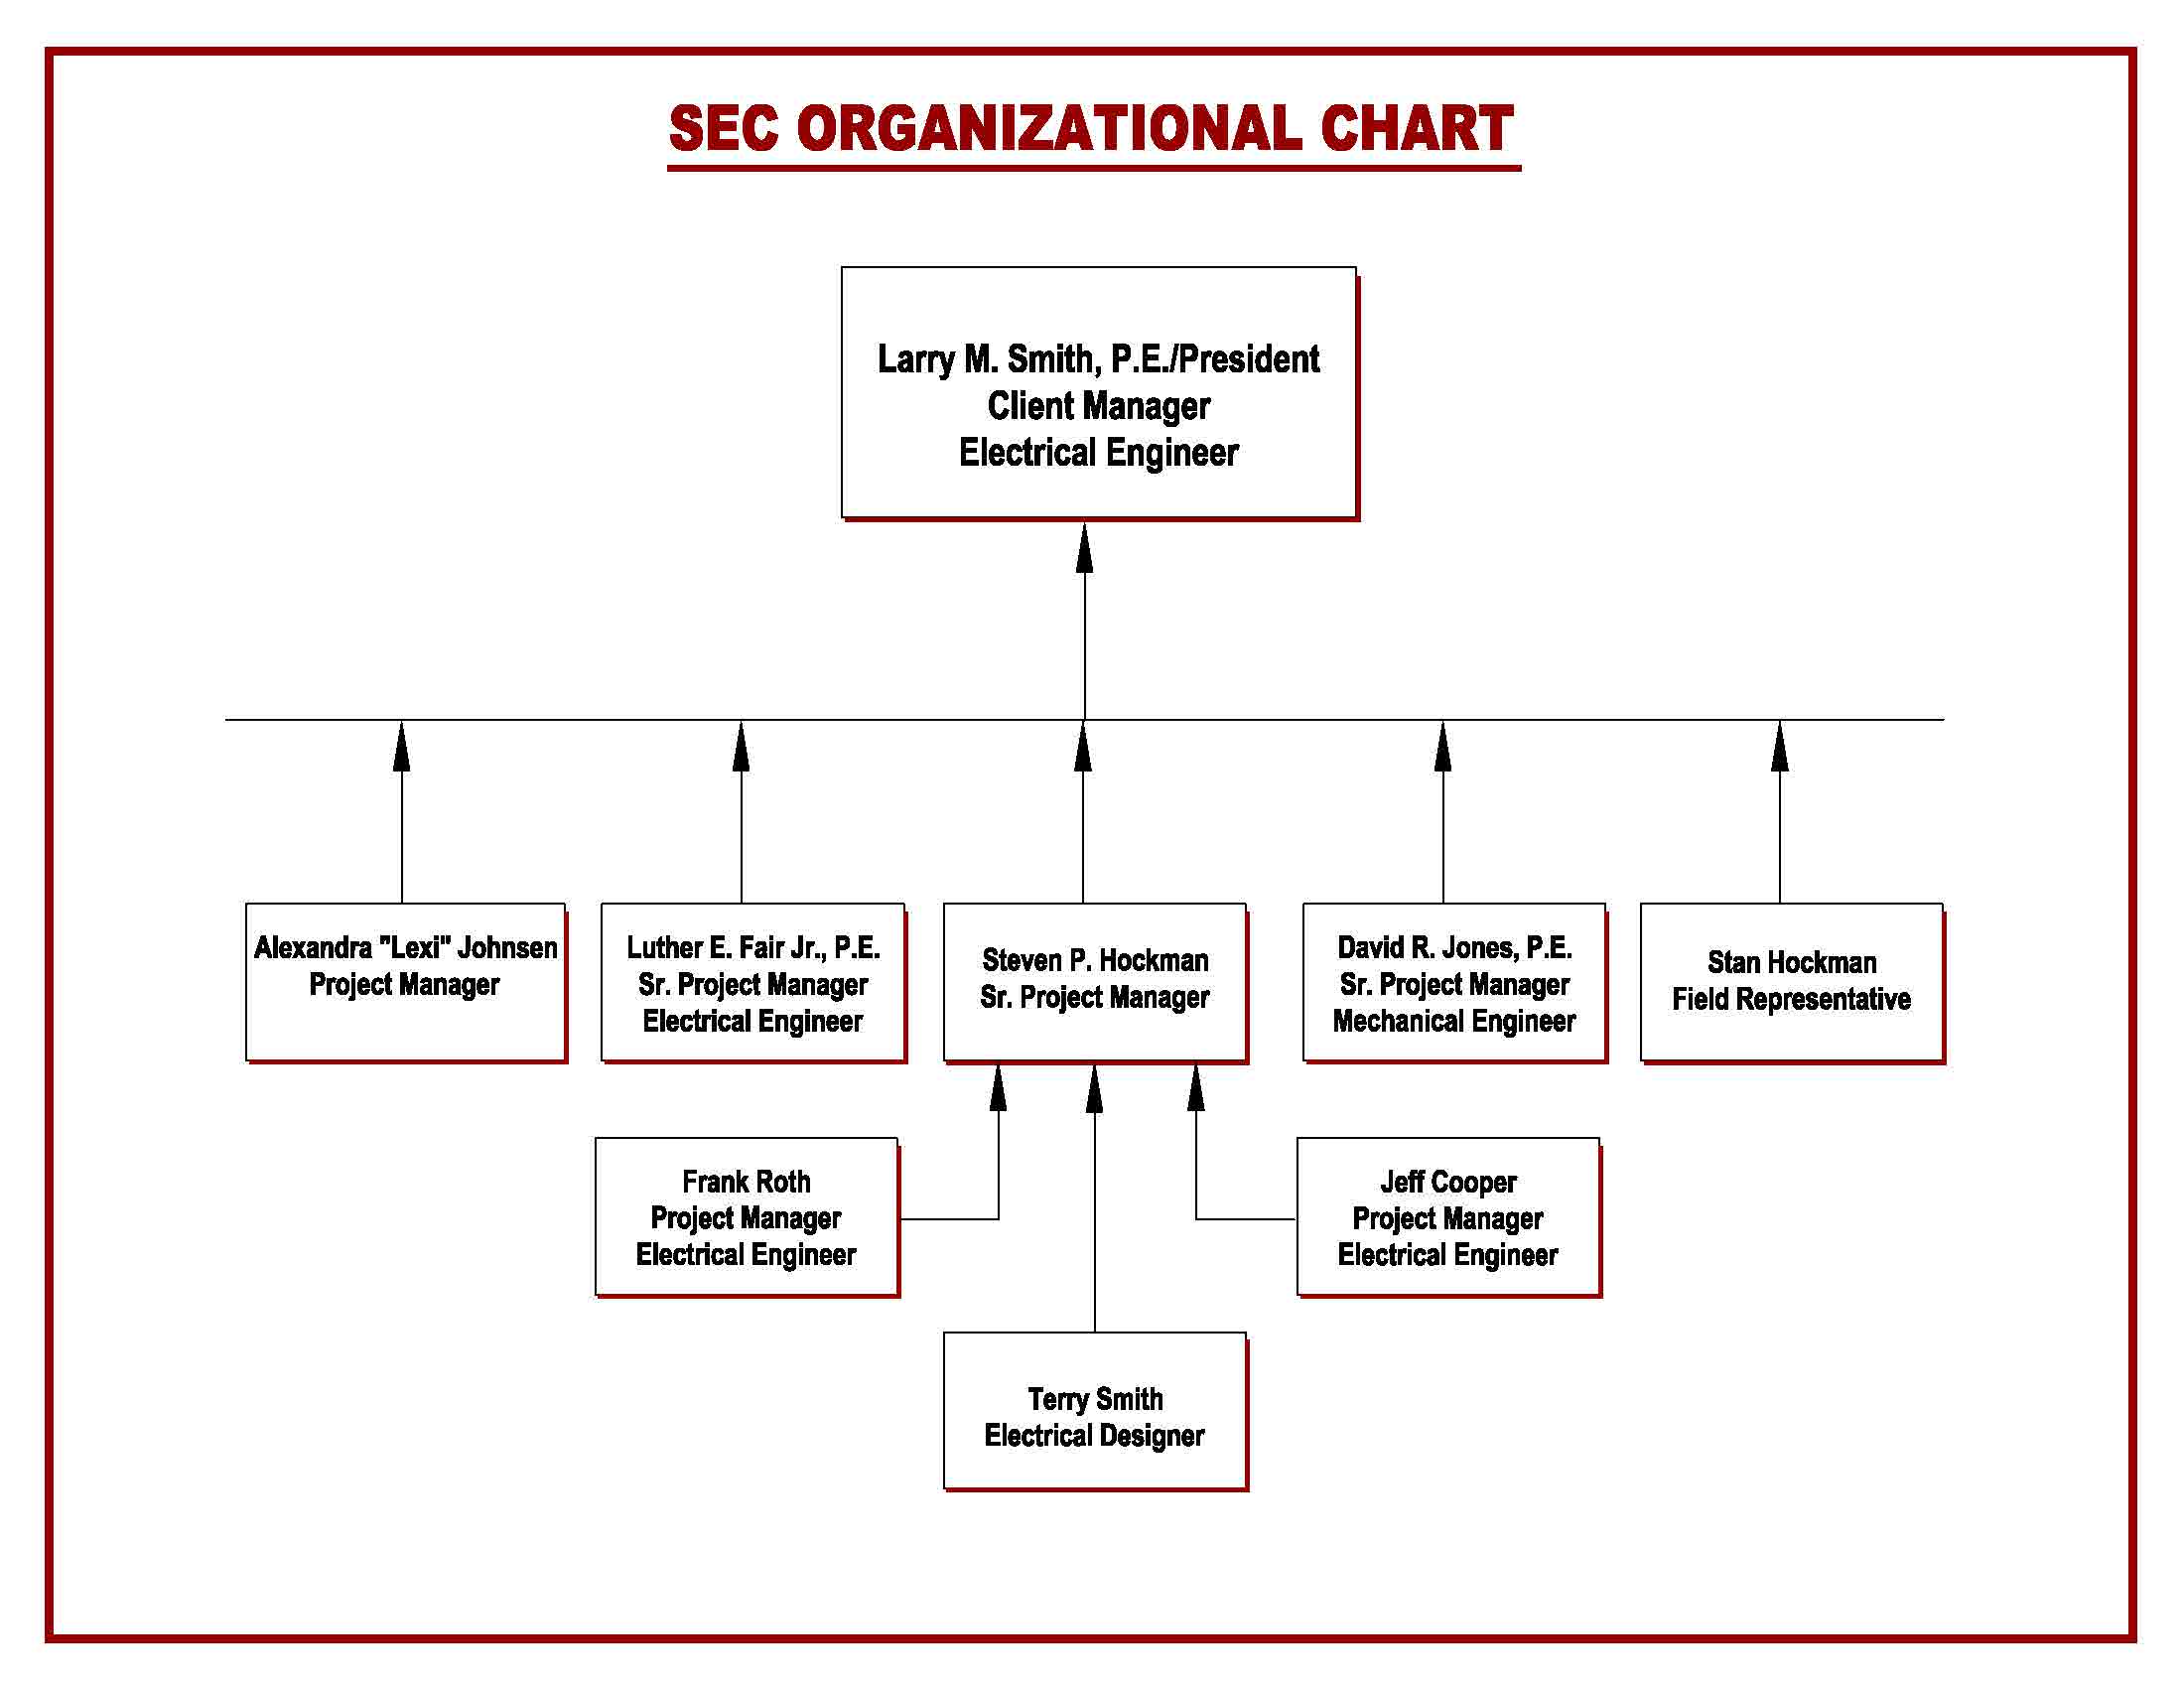 SEC Organizational Chart